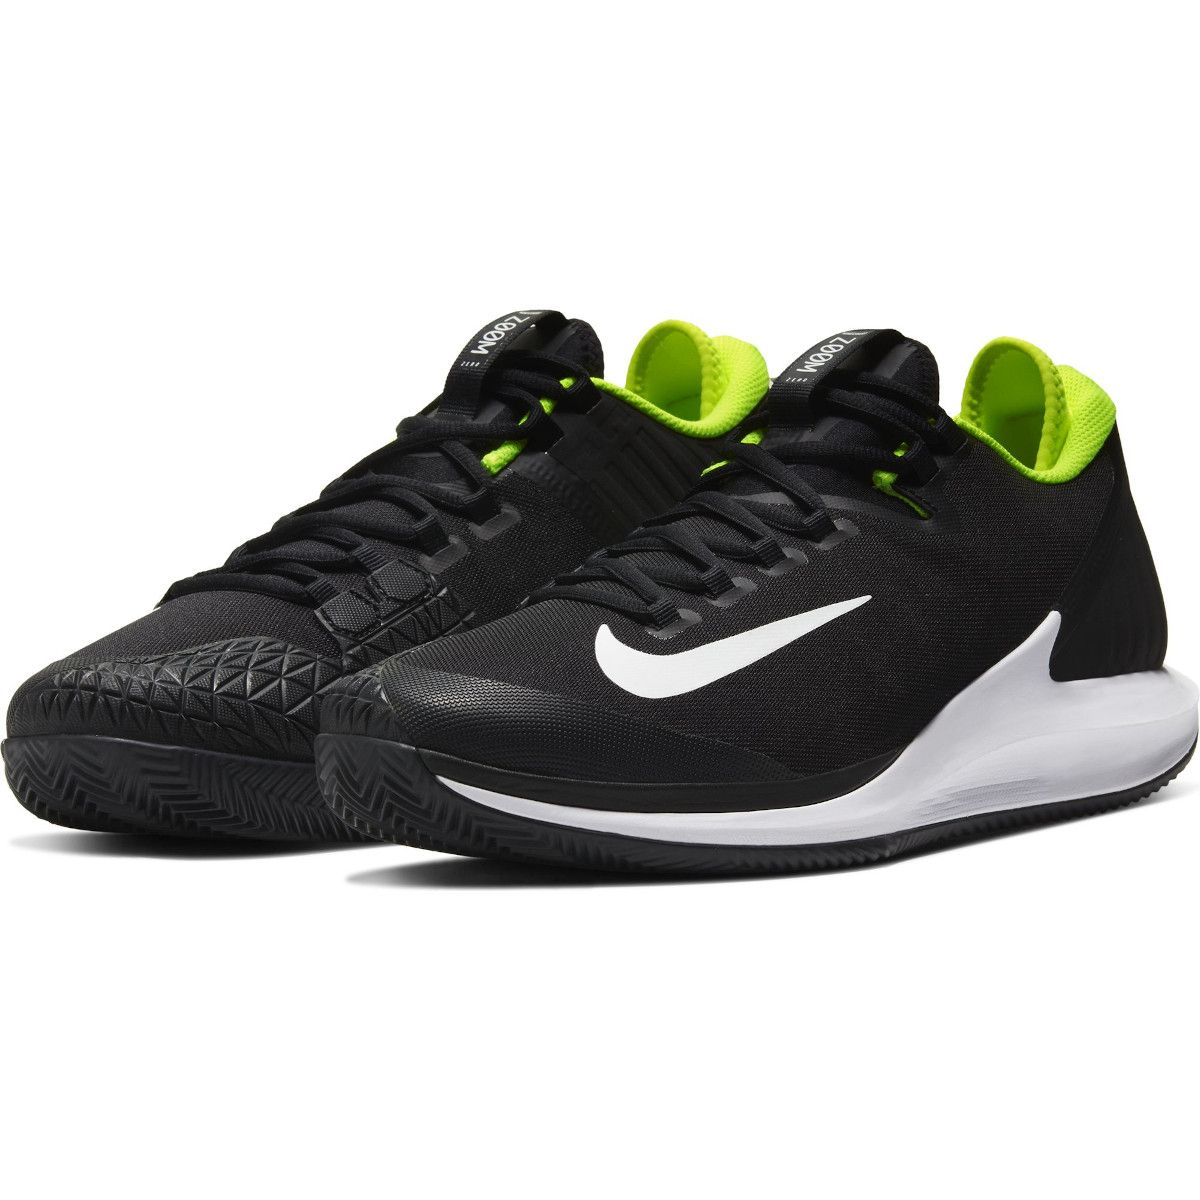 NikeCourt Air Zoom Zero Clay Men's Tennis Shoes